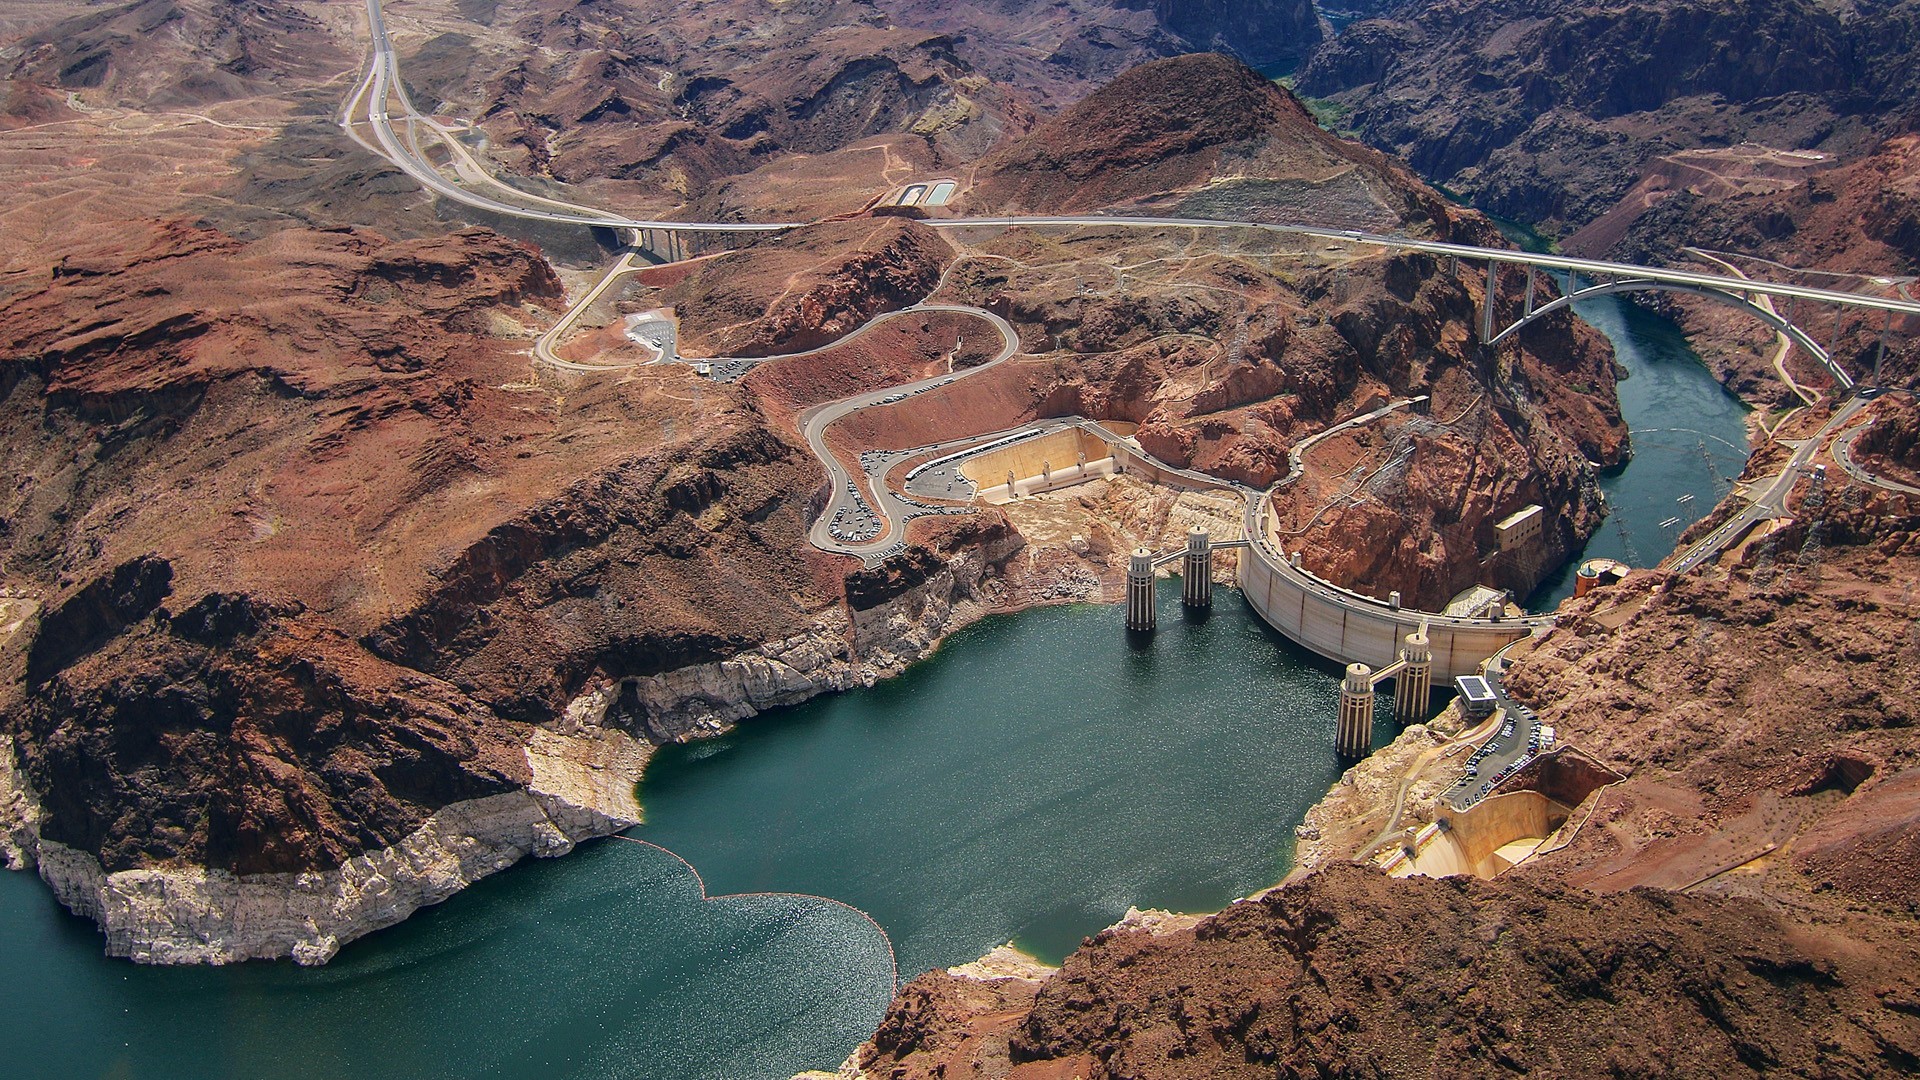 General 1920x1080 nature landscape road Hoover Dam Colorado River aerial view USA construction dam